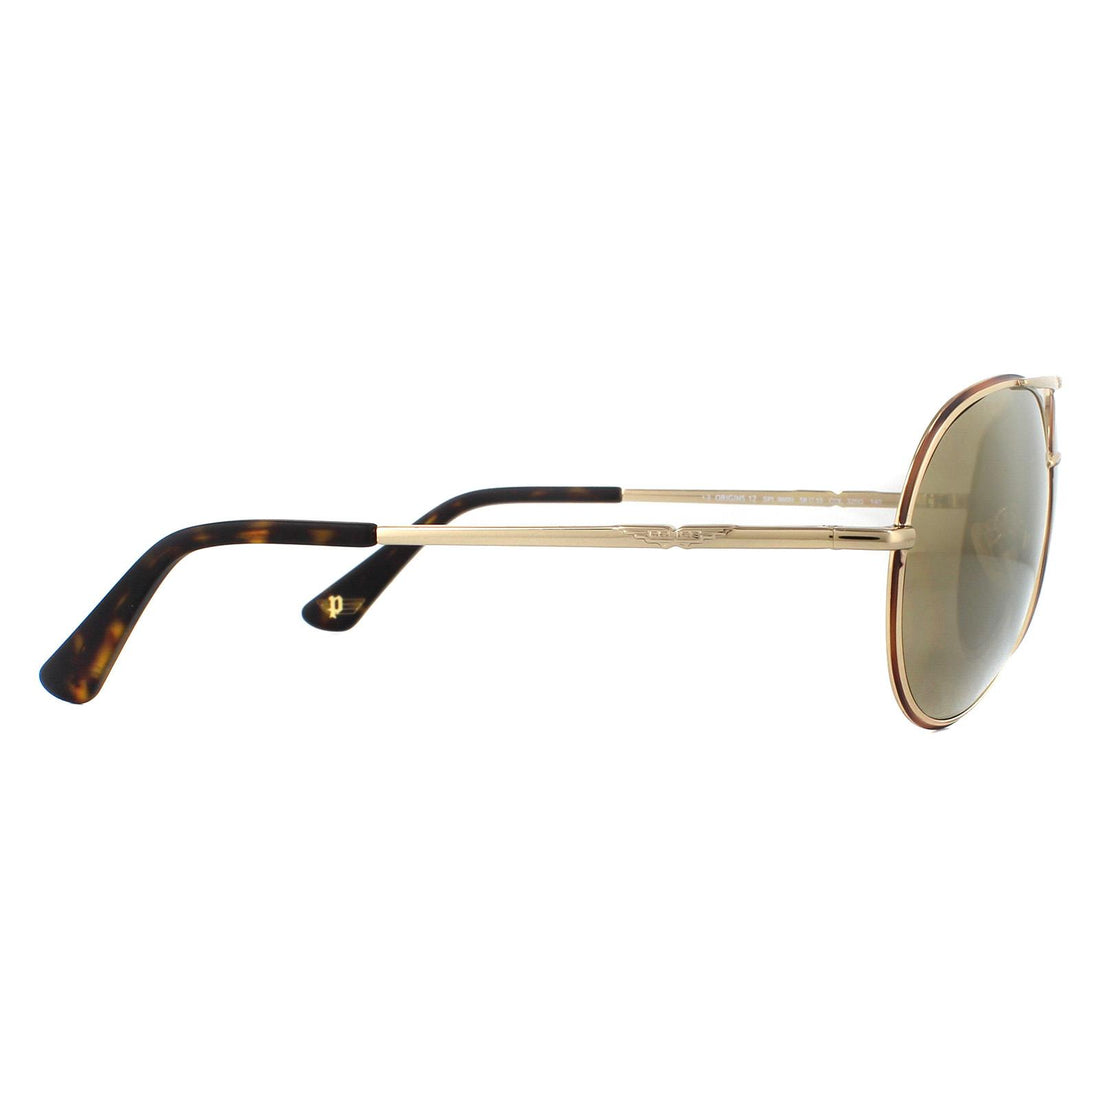 Police Sunglasses SPL966N Origins 12 320G Rose Gold Havana Brown Gold Mirror